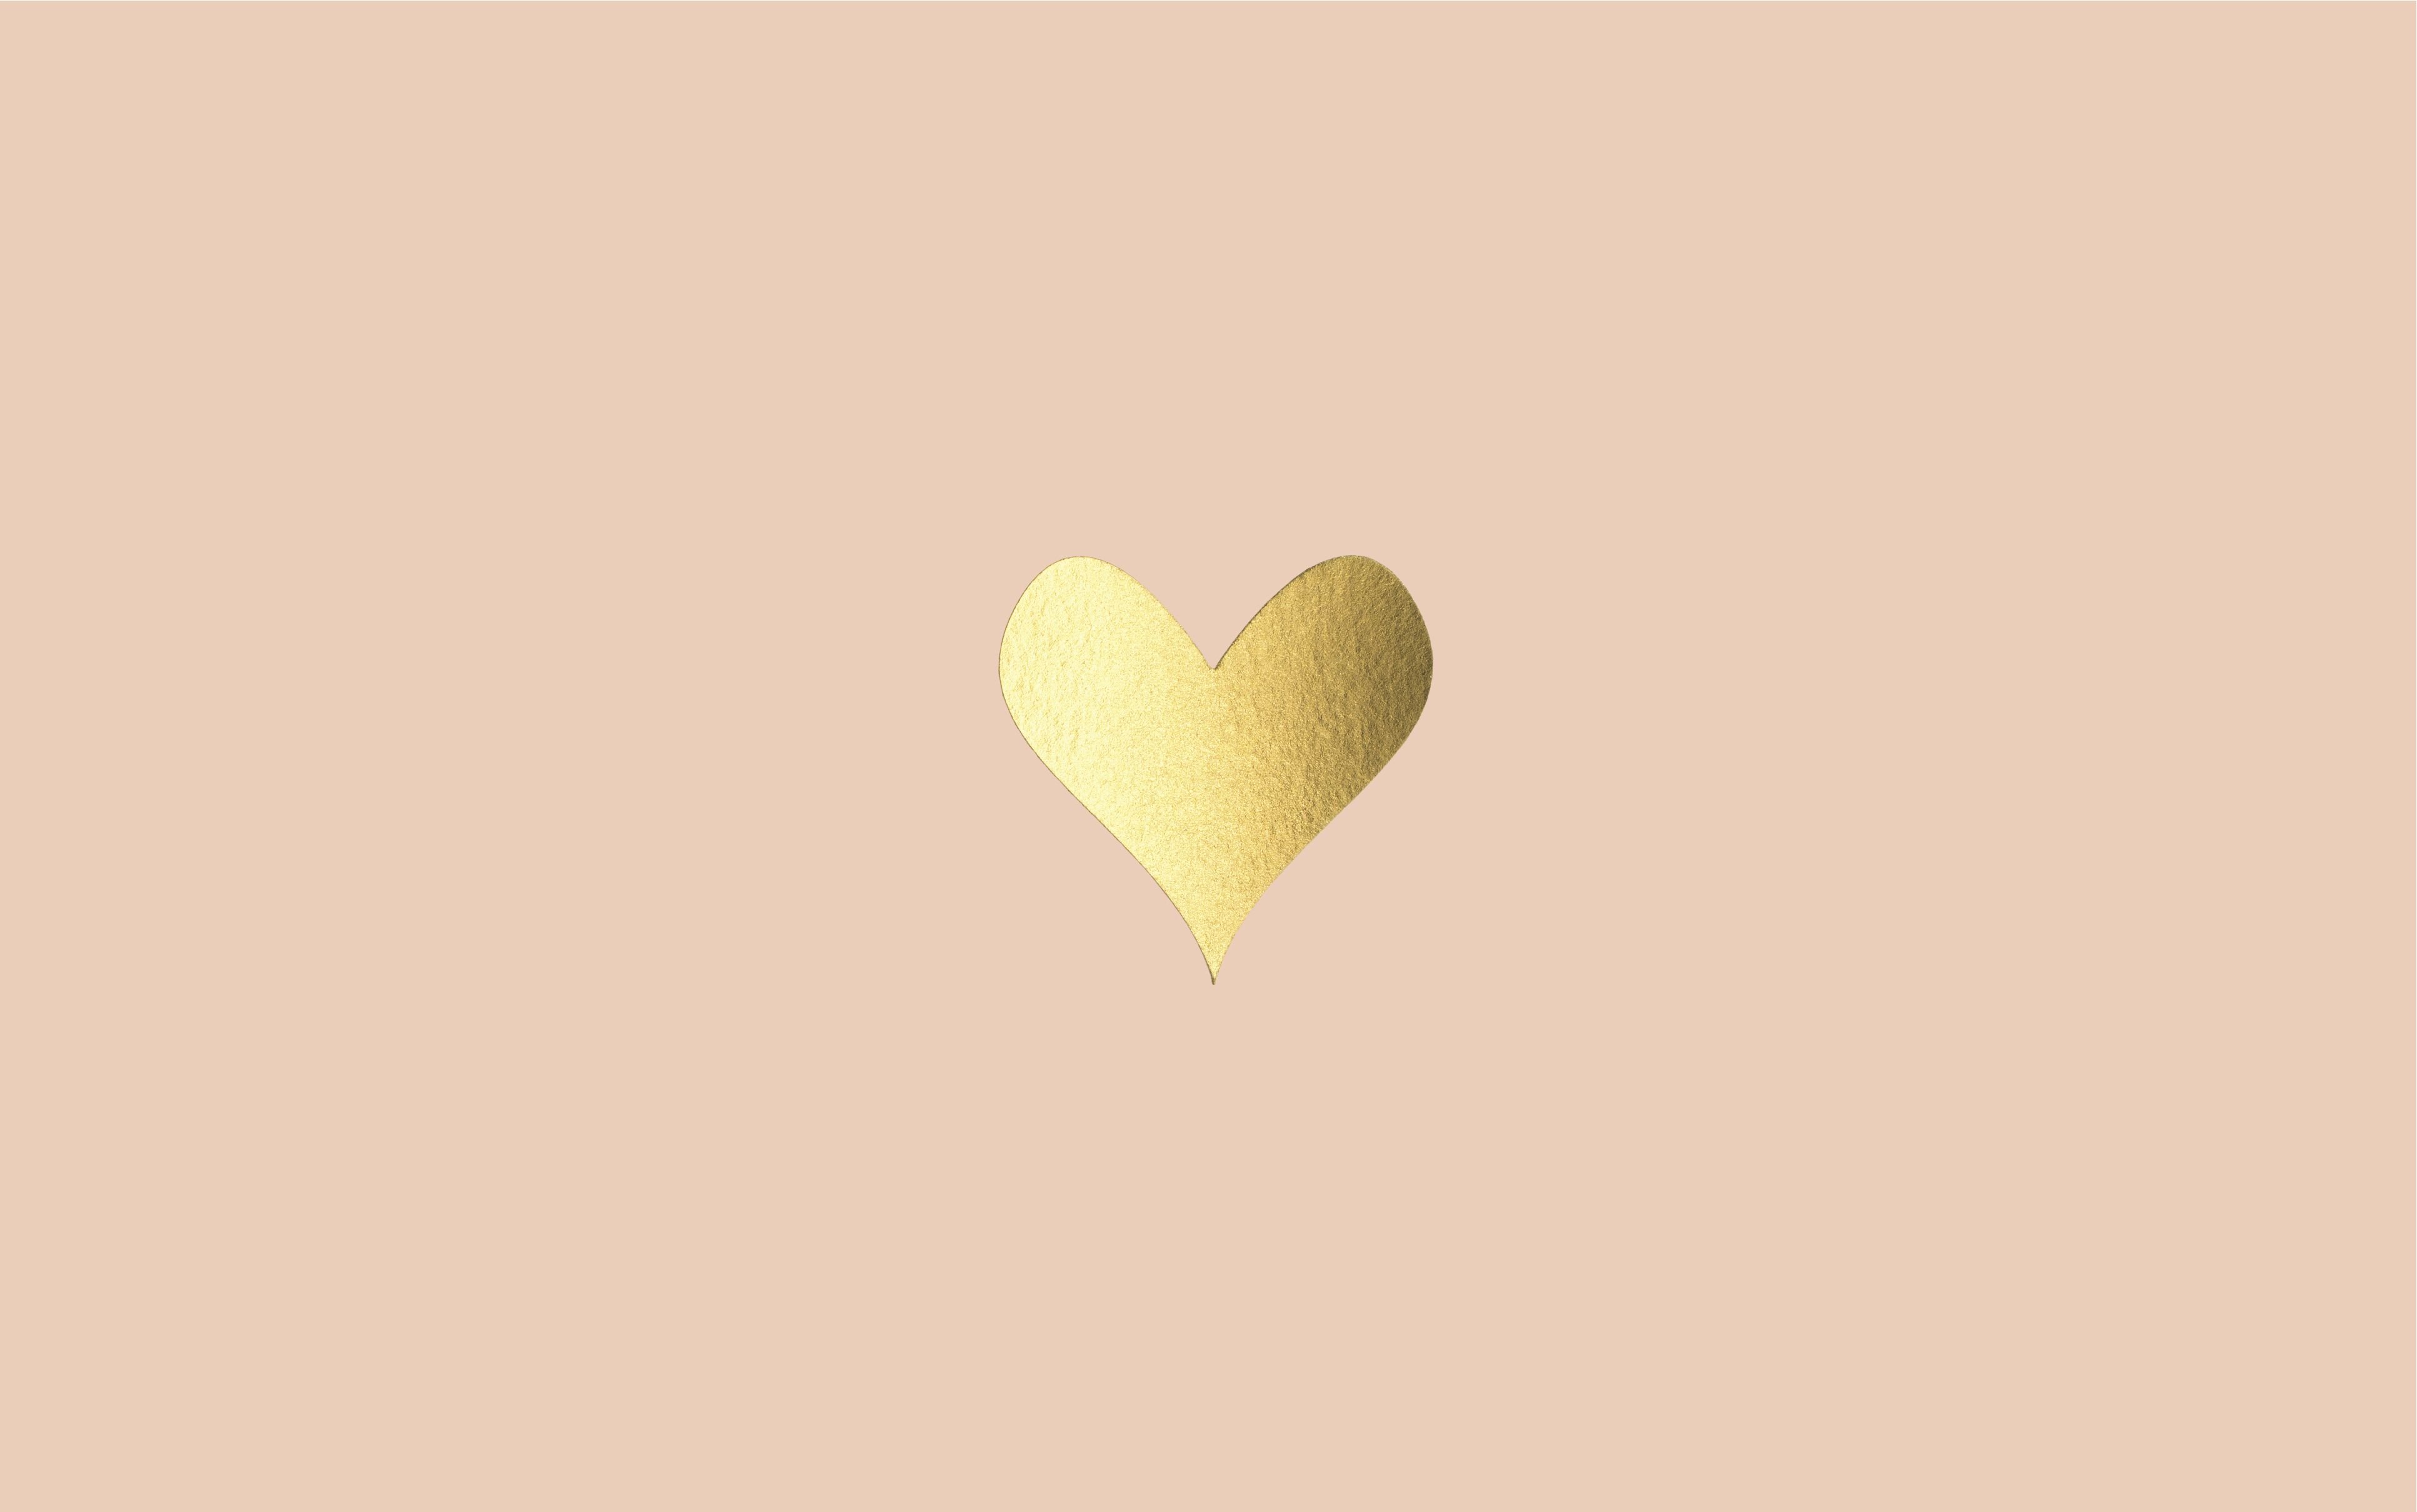 A gold heart on a pink background - Minimalist beige